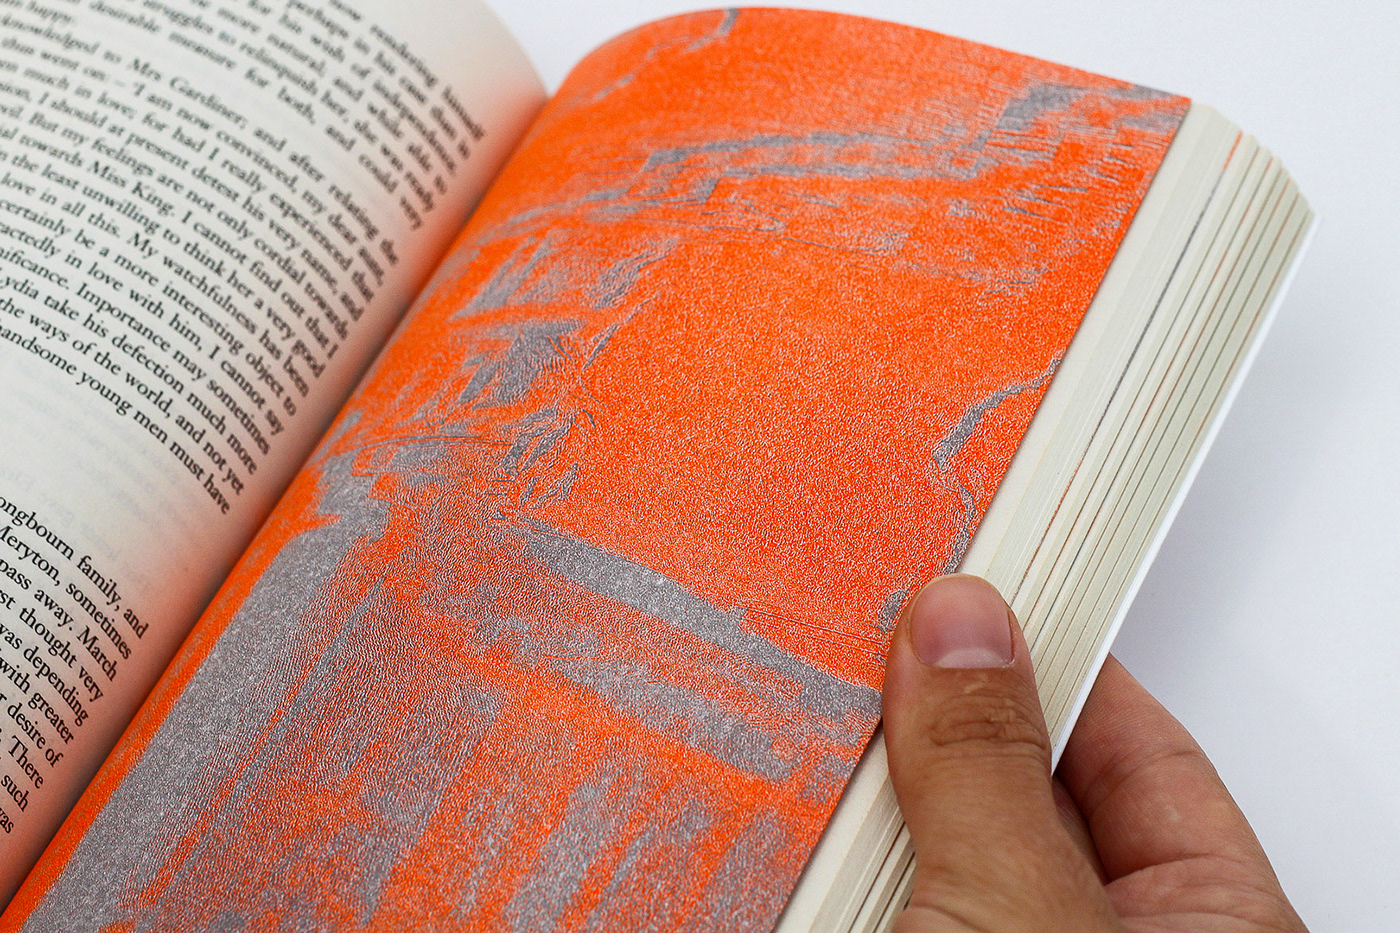 jane austen book design literature book cover austen Riso risograph abstract Warp manipulation